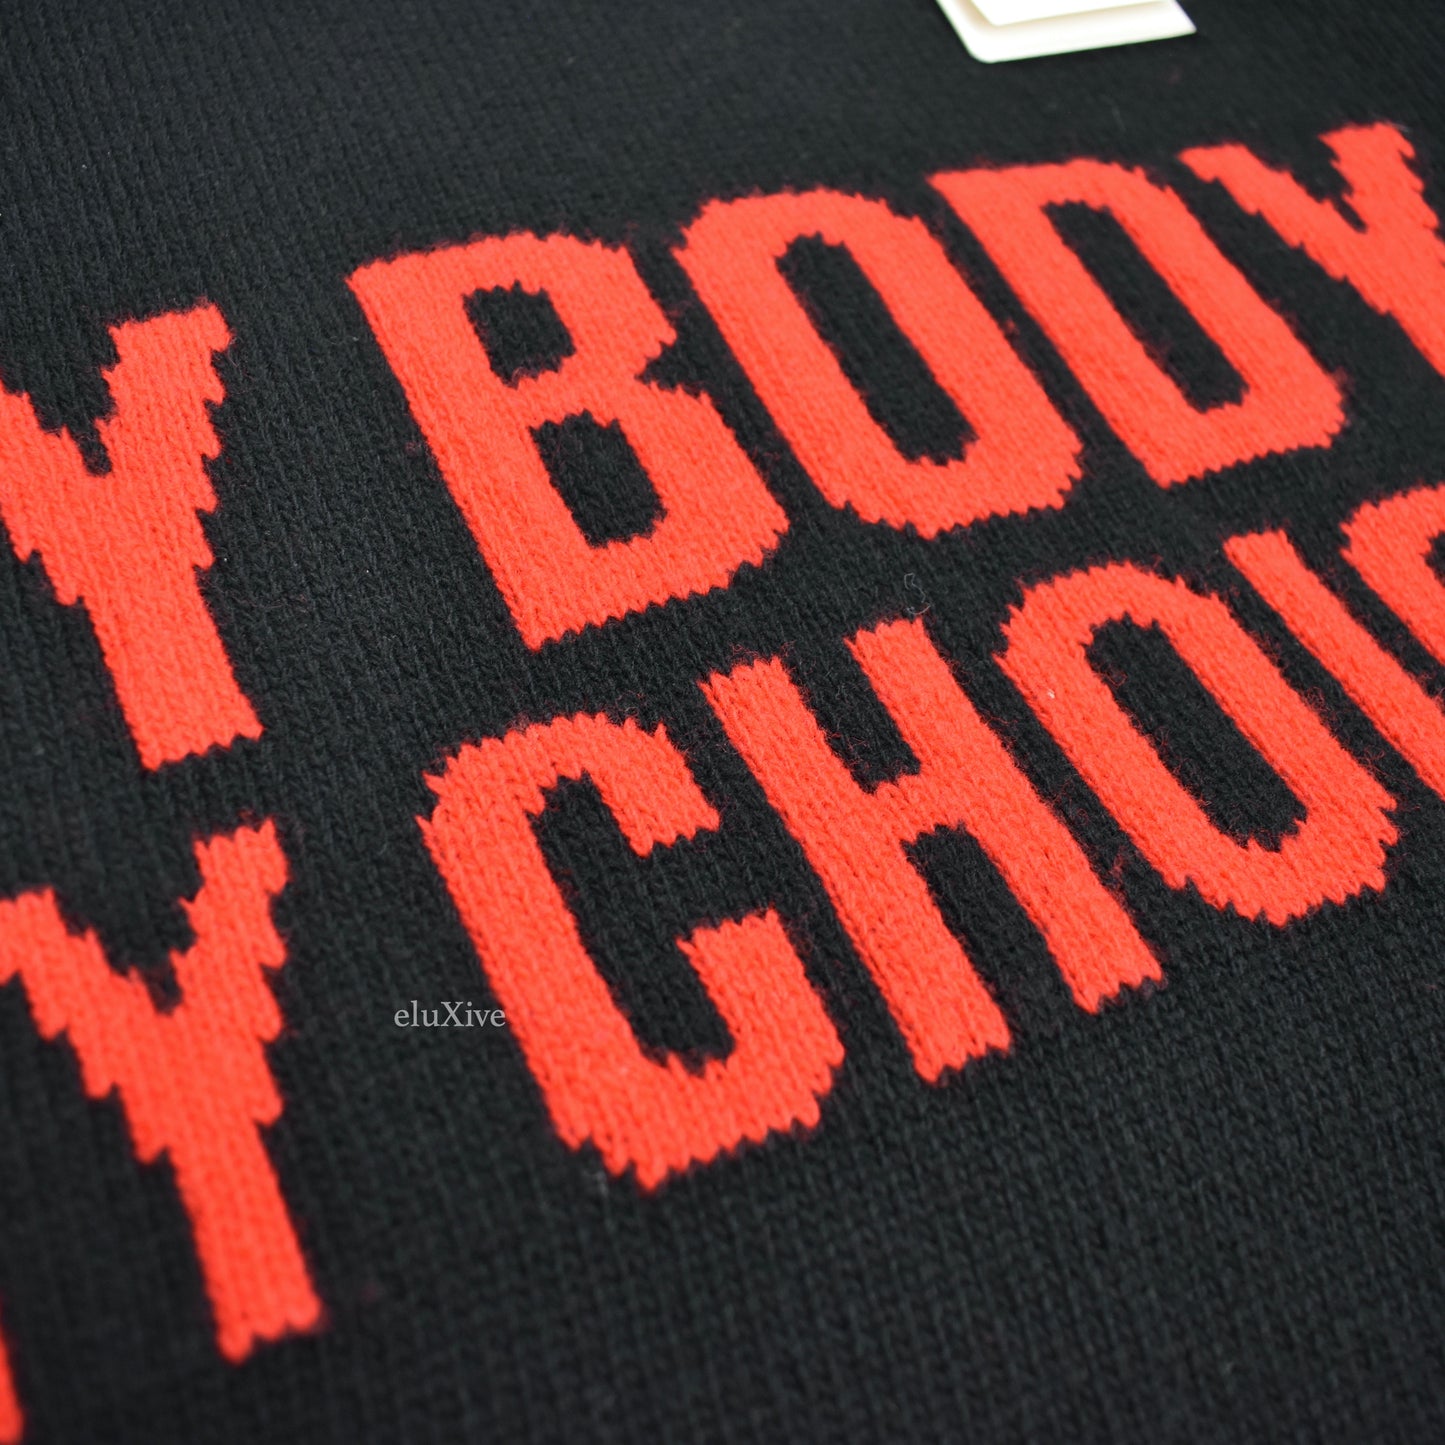 Gucci - Black My Body My Choice Intarsia Knit Sweater